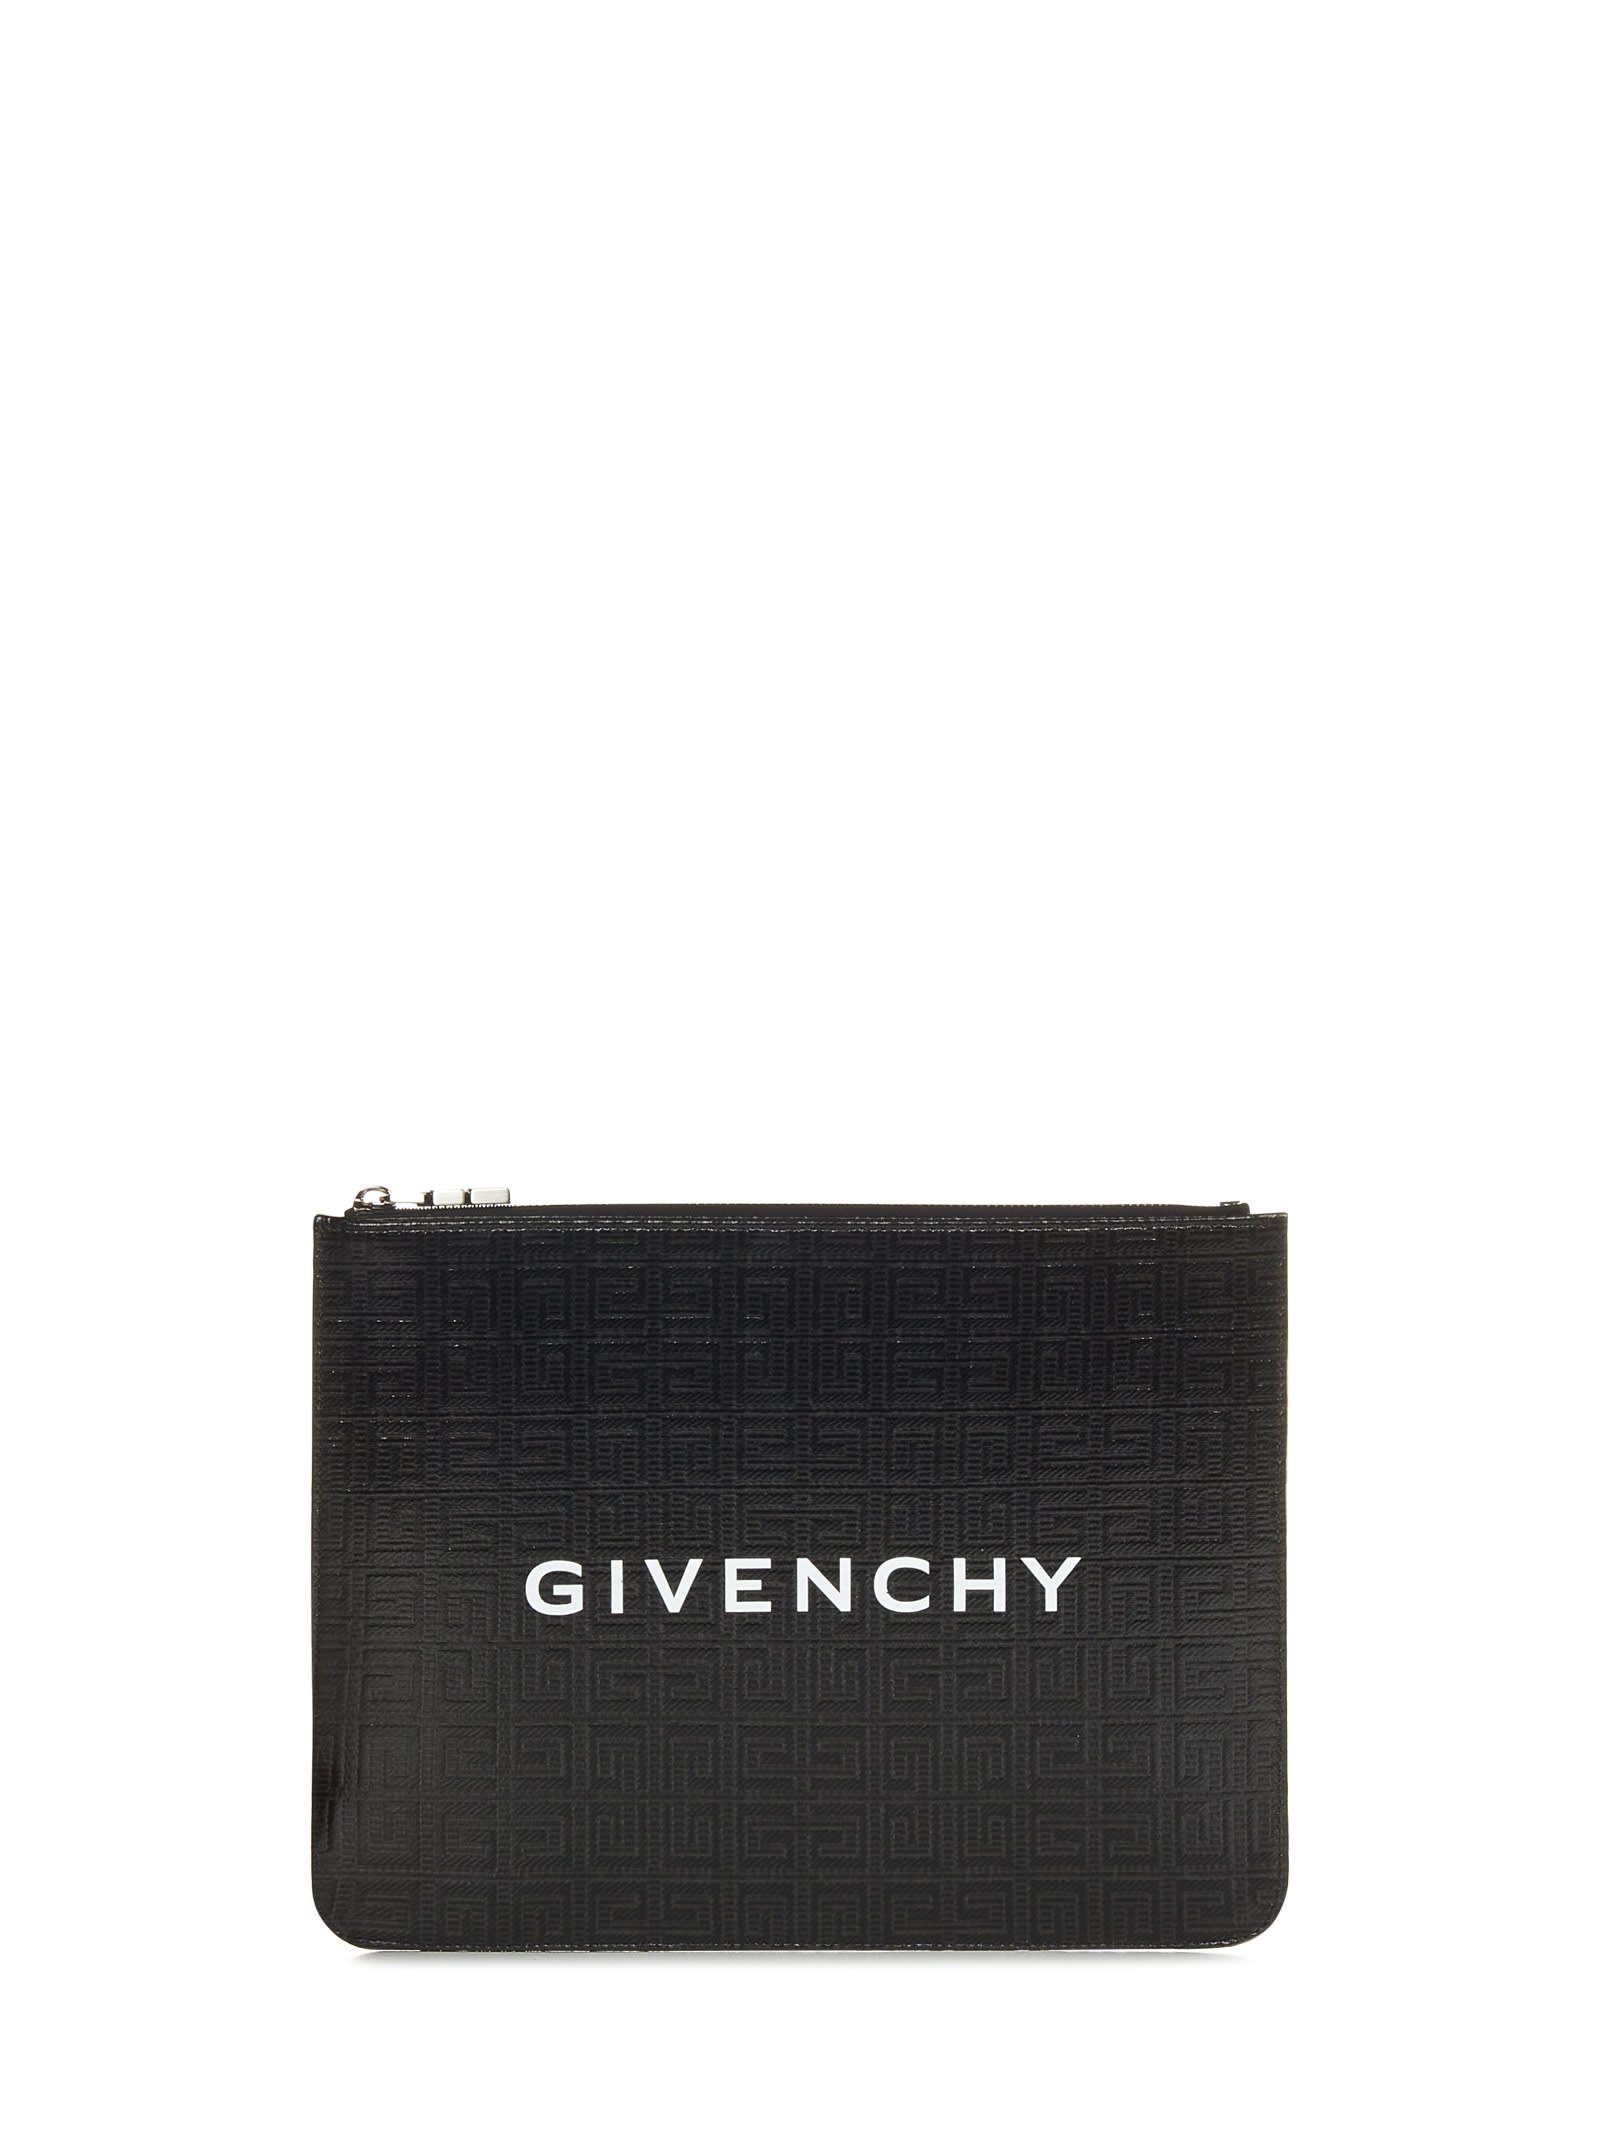 Givenchy 4g Clutch